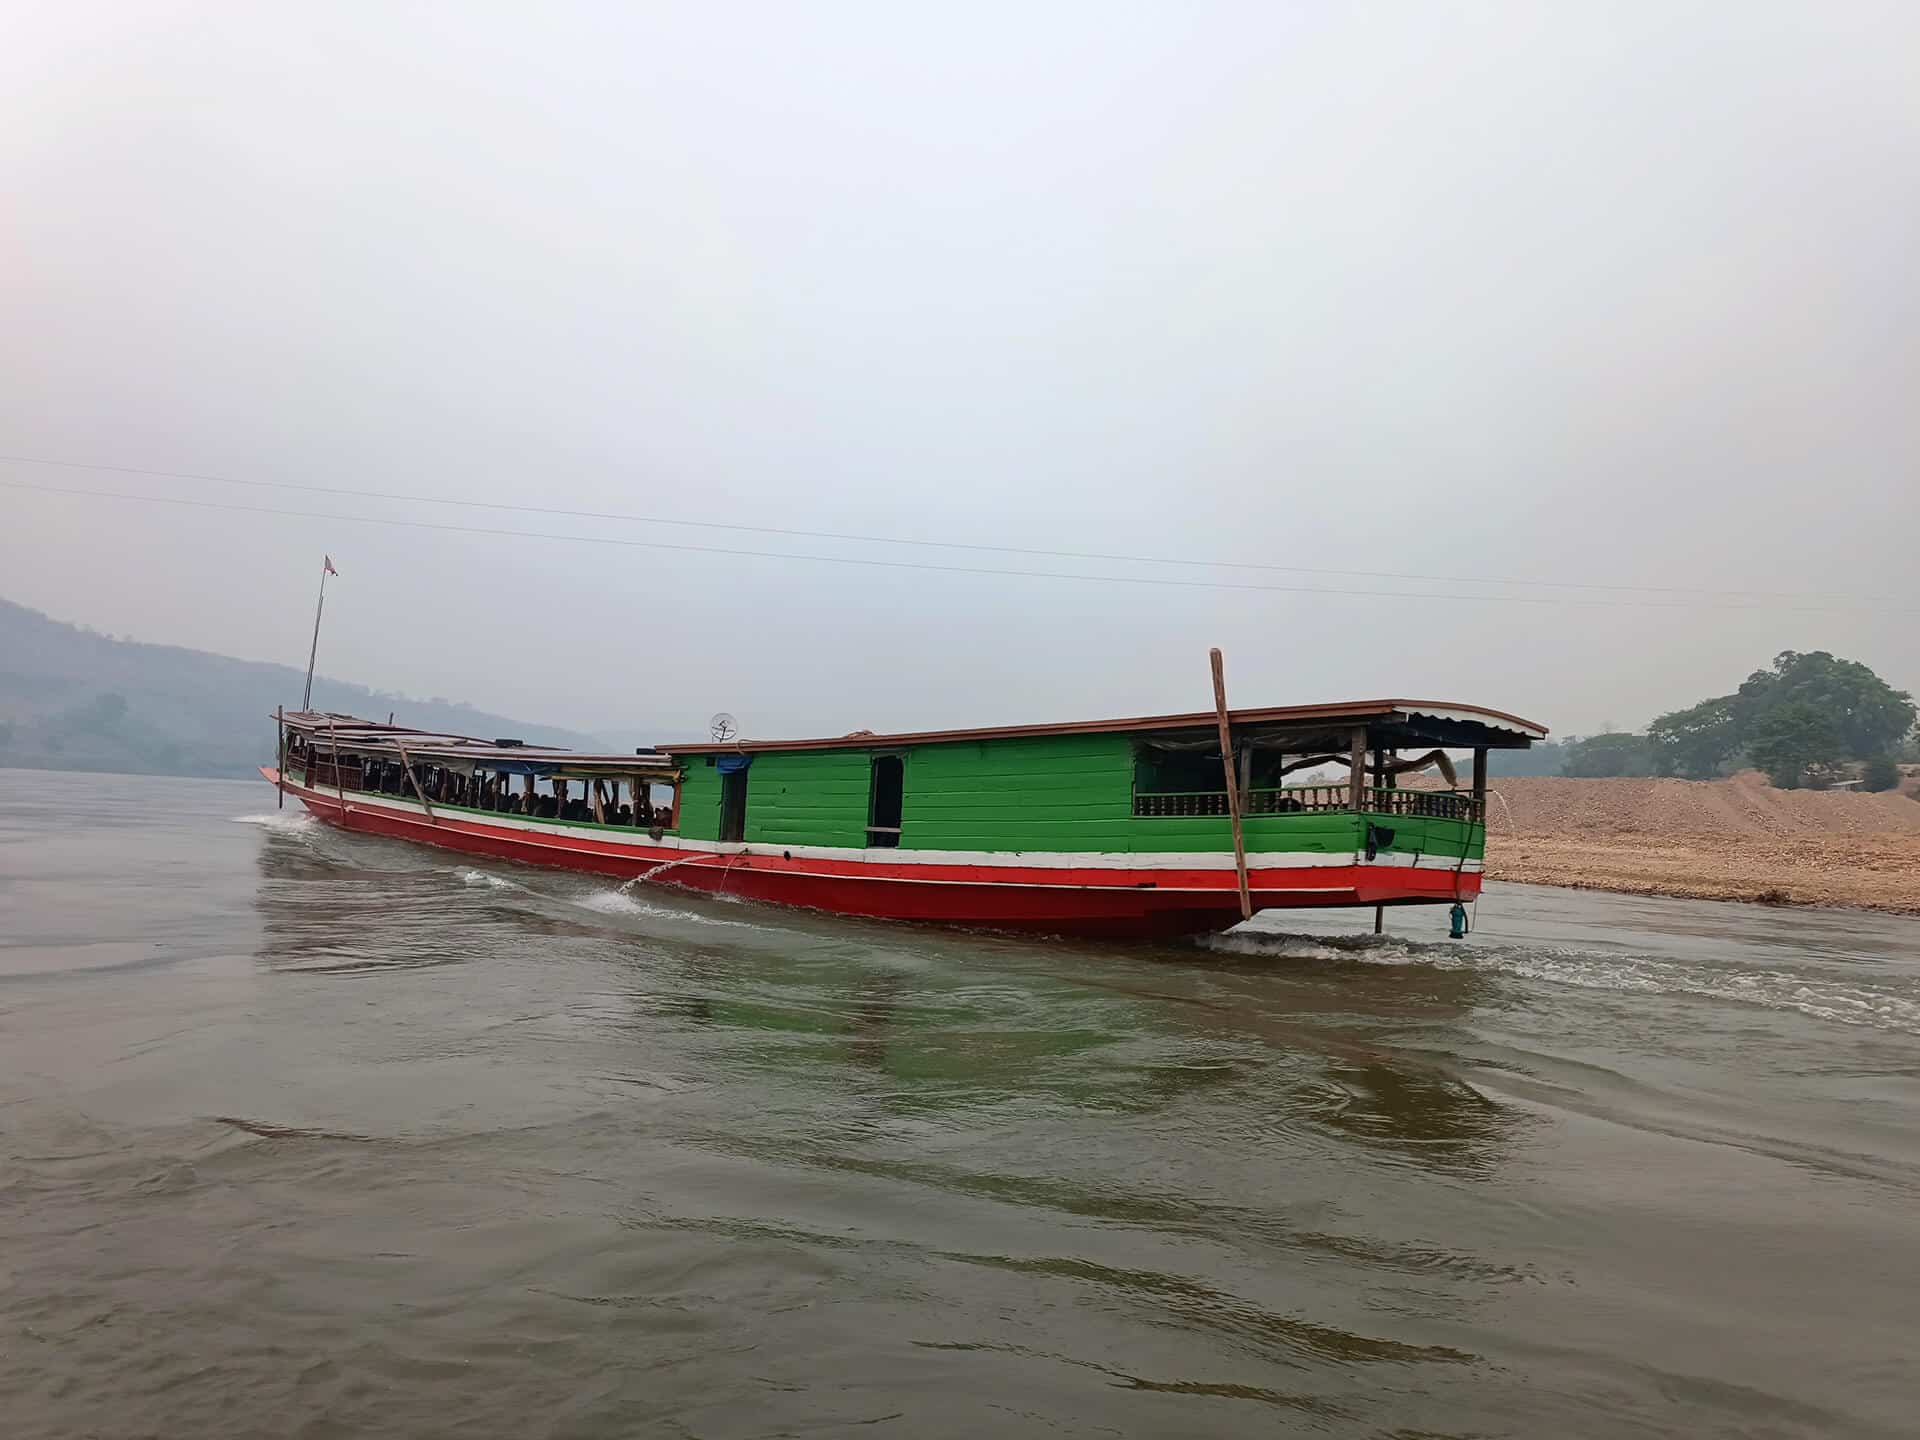 Zwei Tage über den Mekong mit dem Slow Boat: Von Huay Xai nach Luang Prabang in Laos